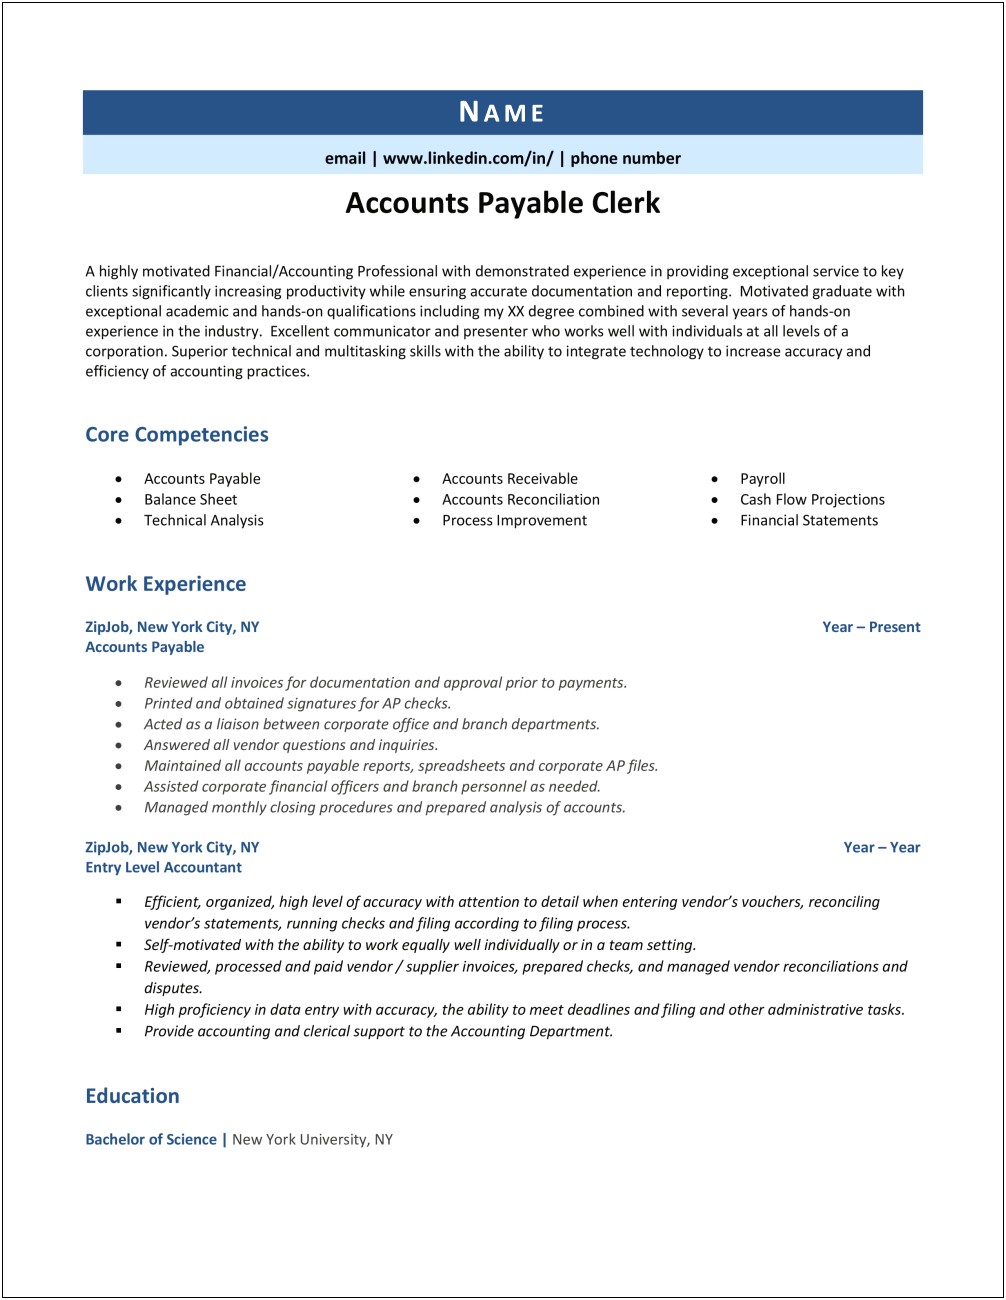 Accounts Payable Clerk Resume Example